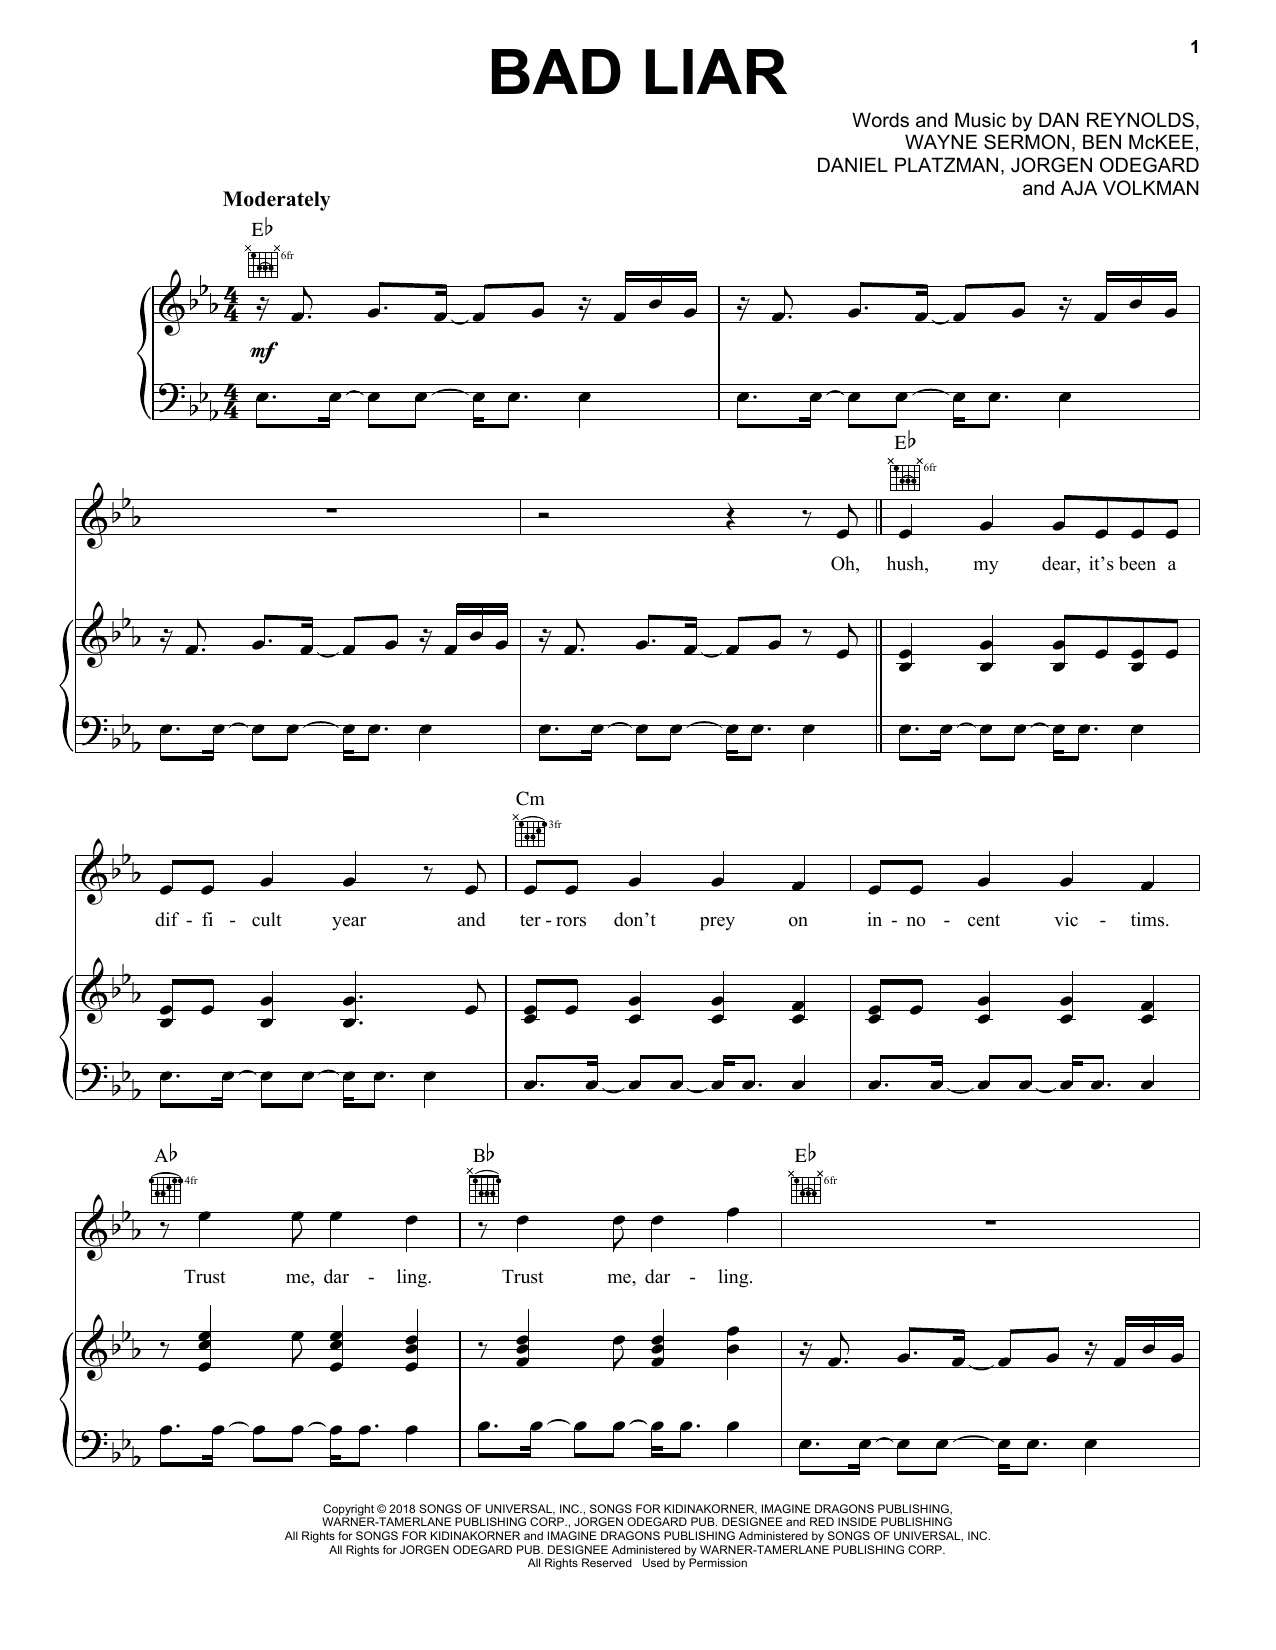 Imagine Dragons Bad Liar Sheet Music Notes & Chords for Ukulele - Download or Print PDF